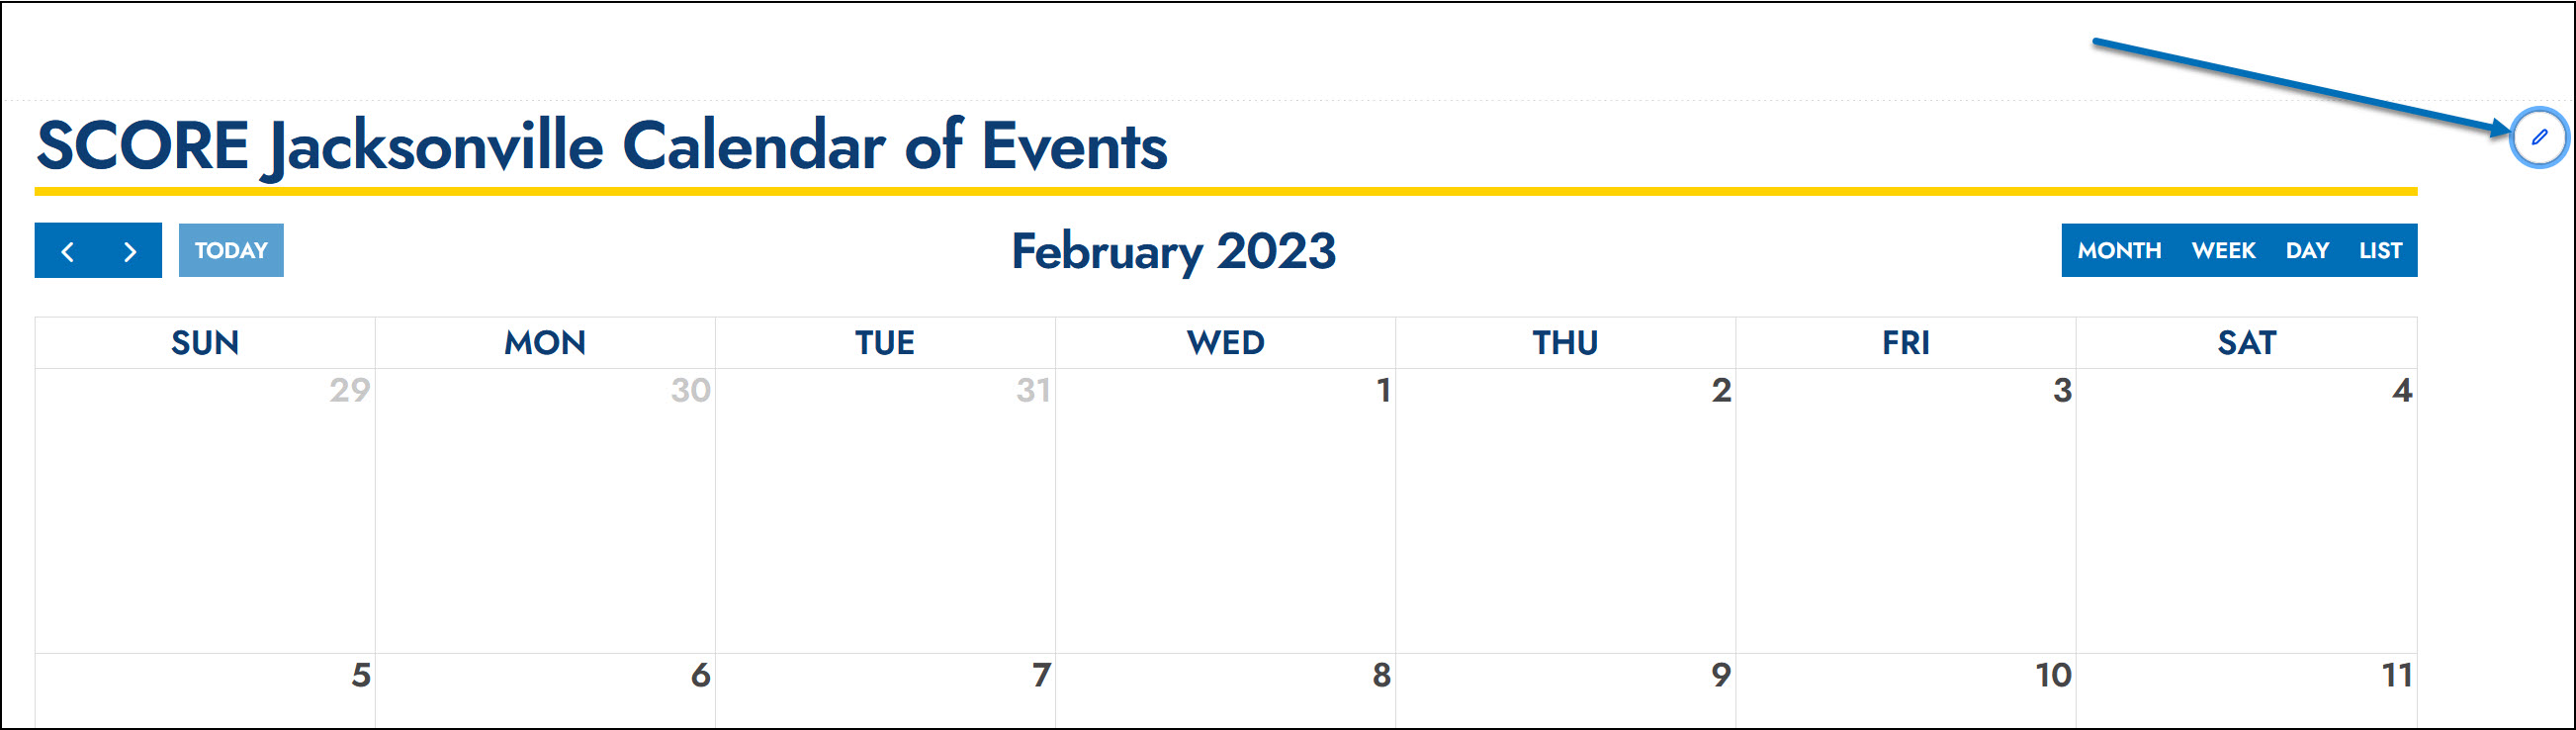 pencil_icon_to_edit_events_calendar.jpg